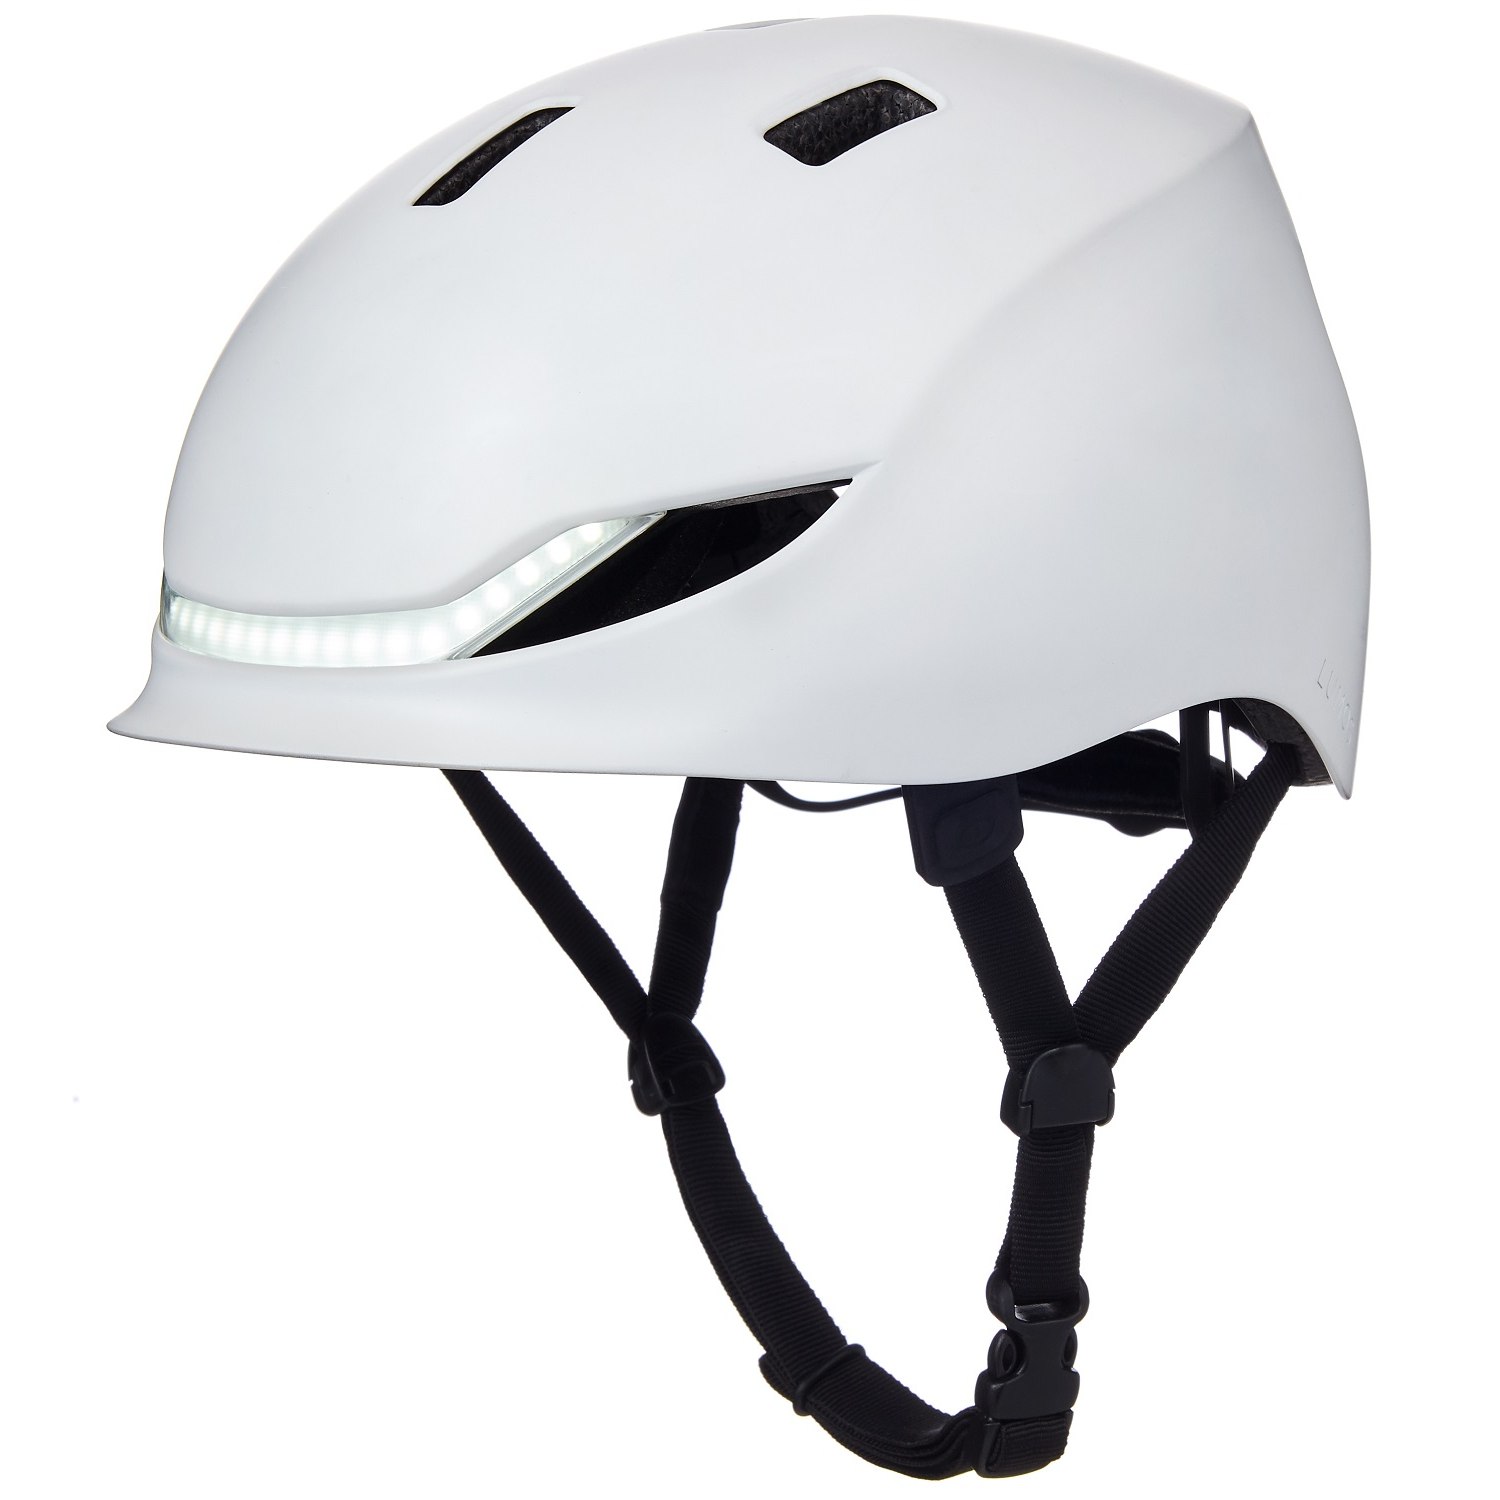 Productfoto van Lumos Street Helmet - Jet White